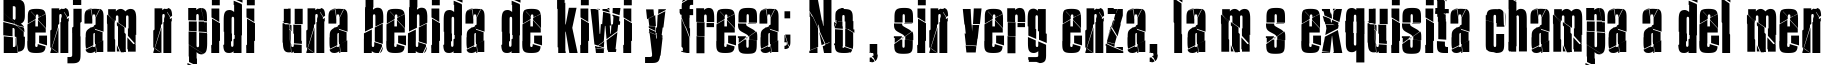 Пример написания шрифтом Bison текста на испанском